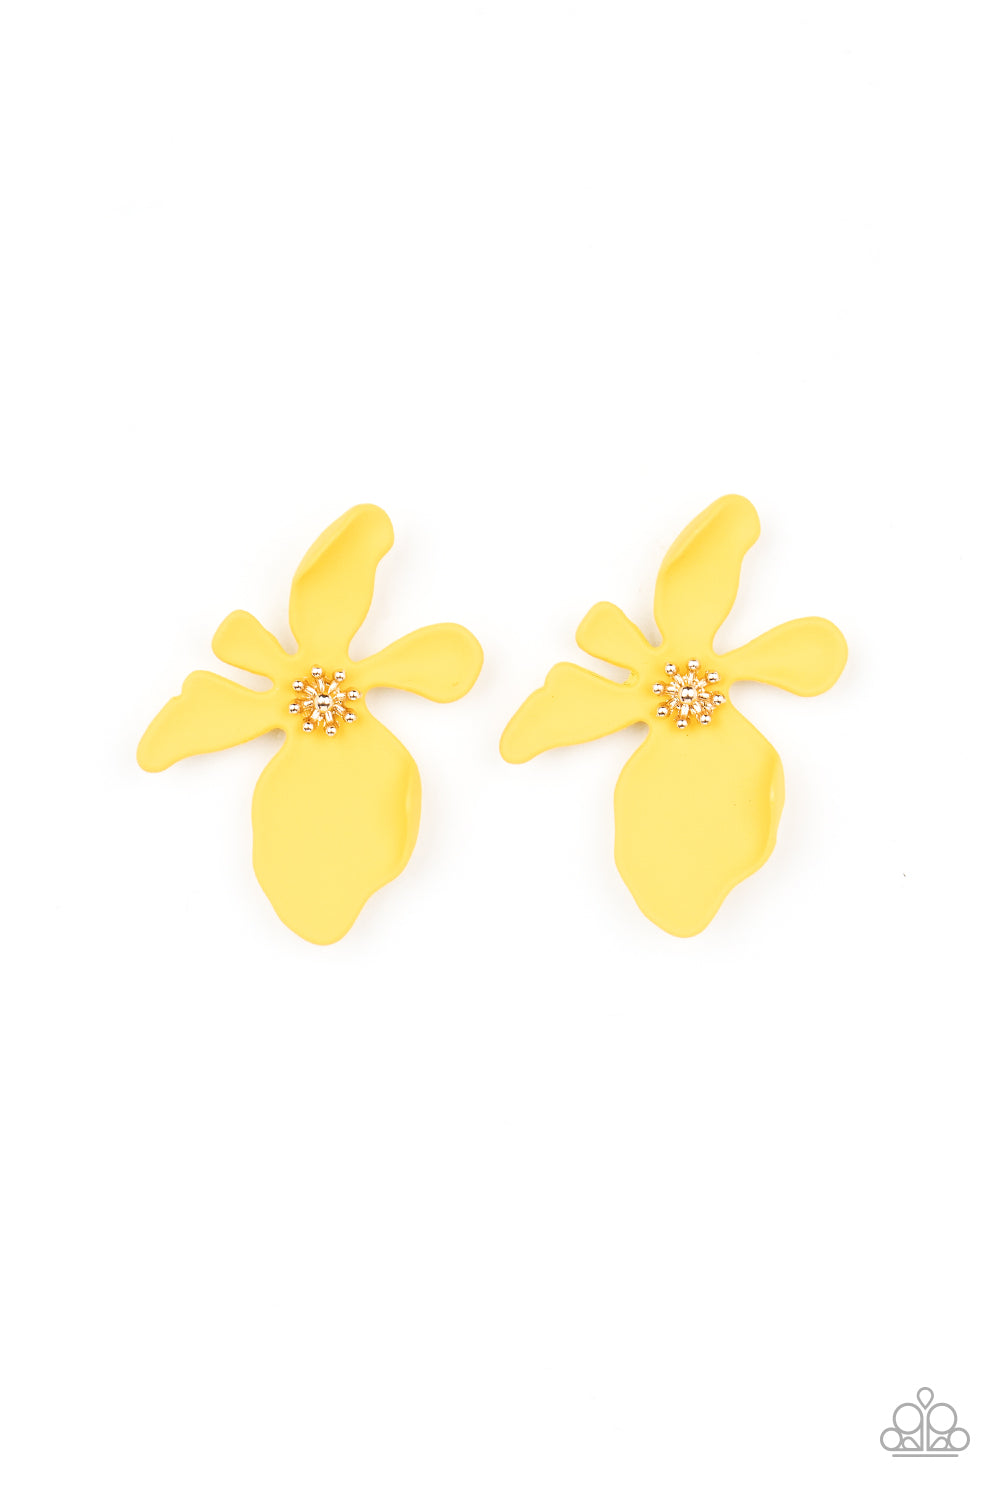 Hawaiian Heiress - Yellow Earrings - Princess Glam Shop